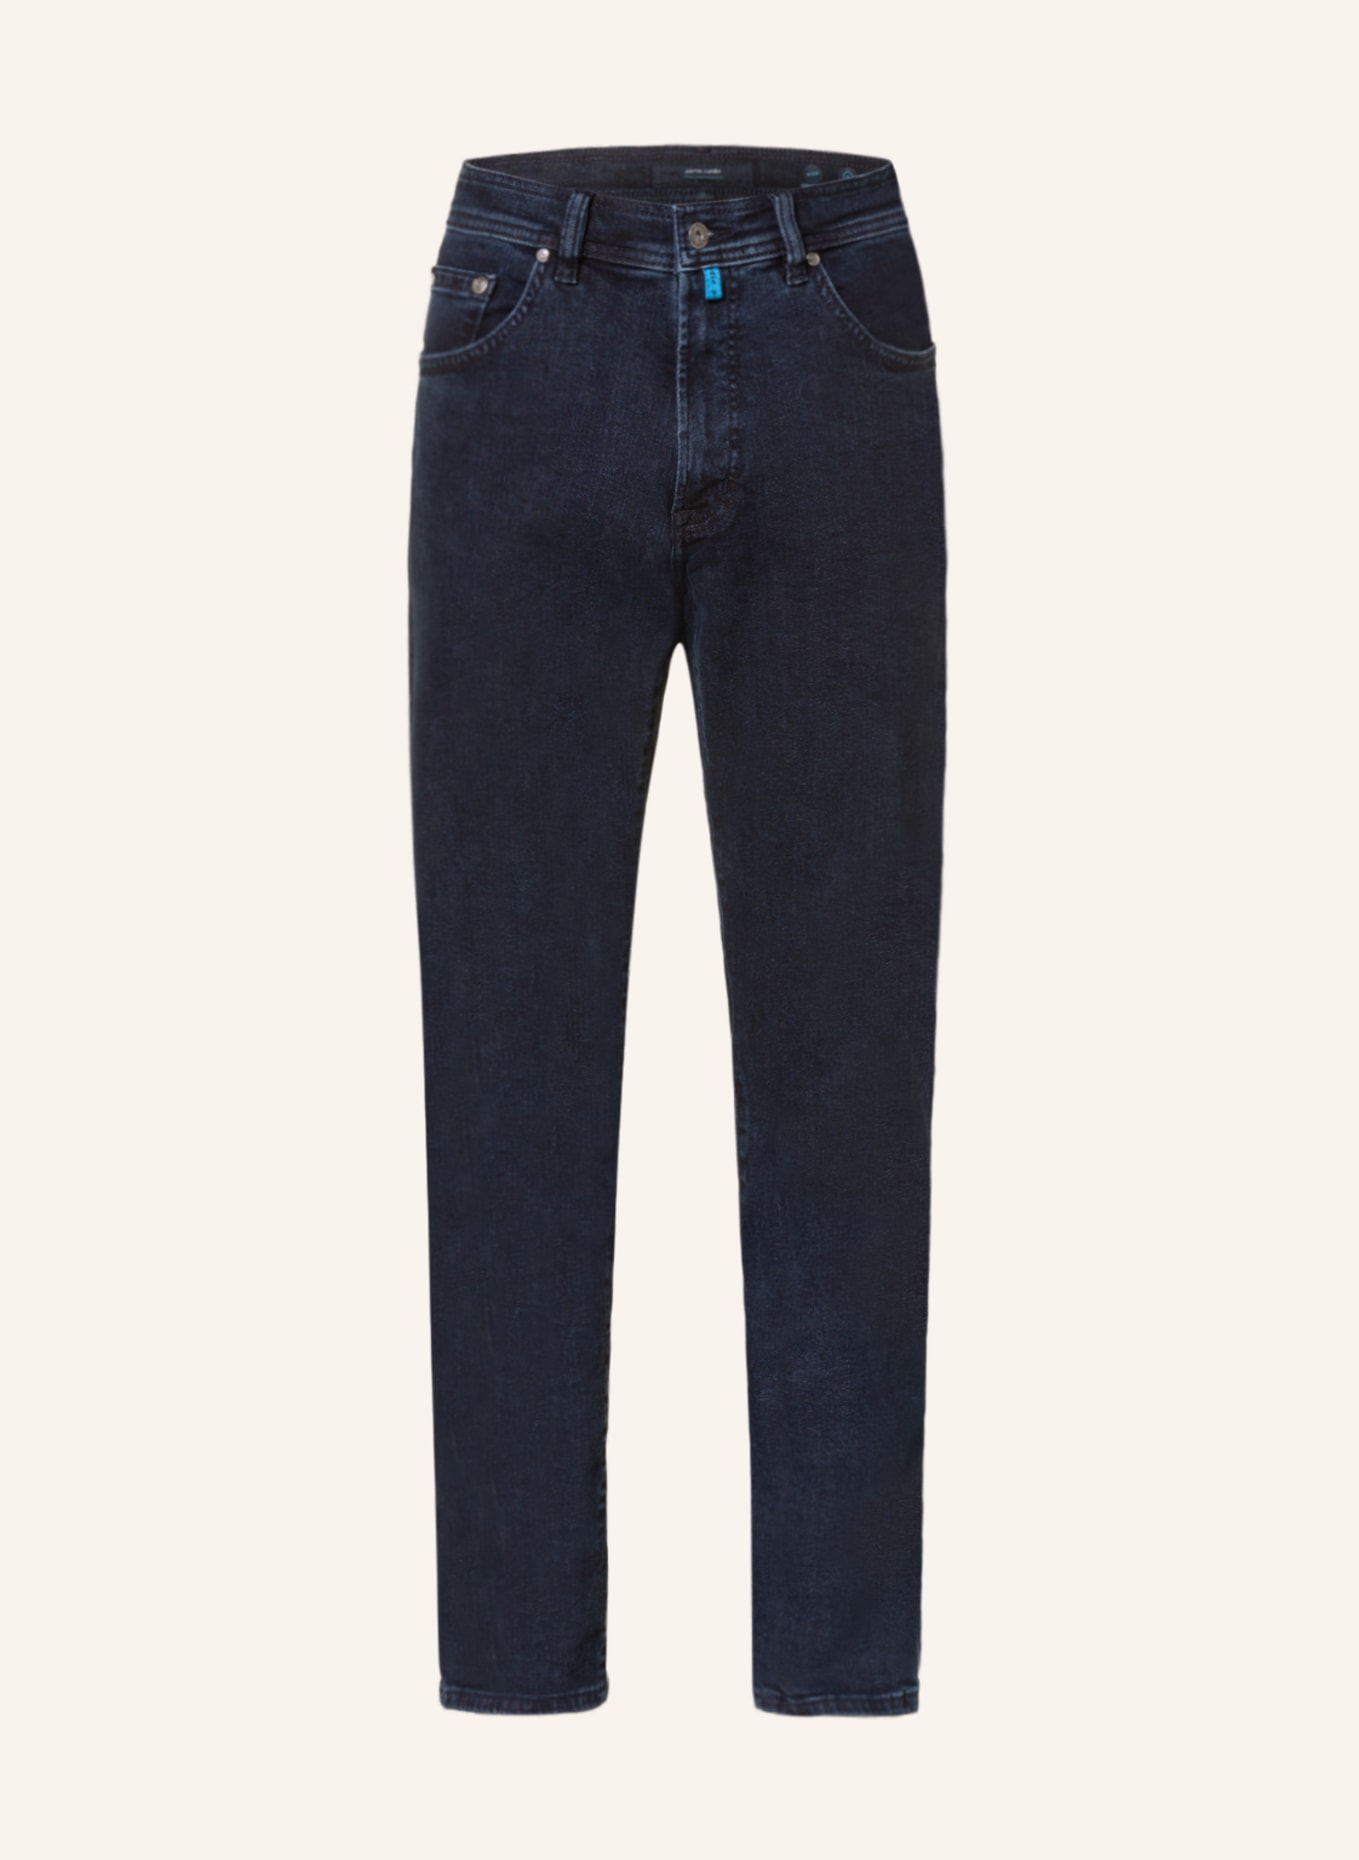 pierre cardin Jeans DIJON Comfort Fit, Farbe: 6811 dark blue stonewash (Bild 1)